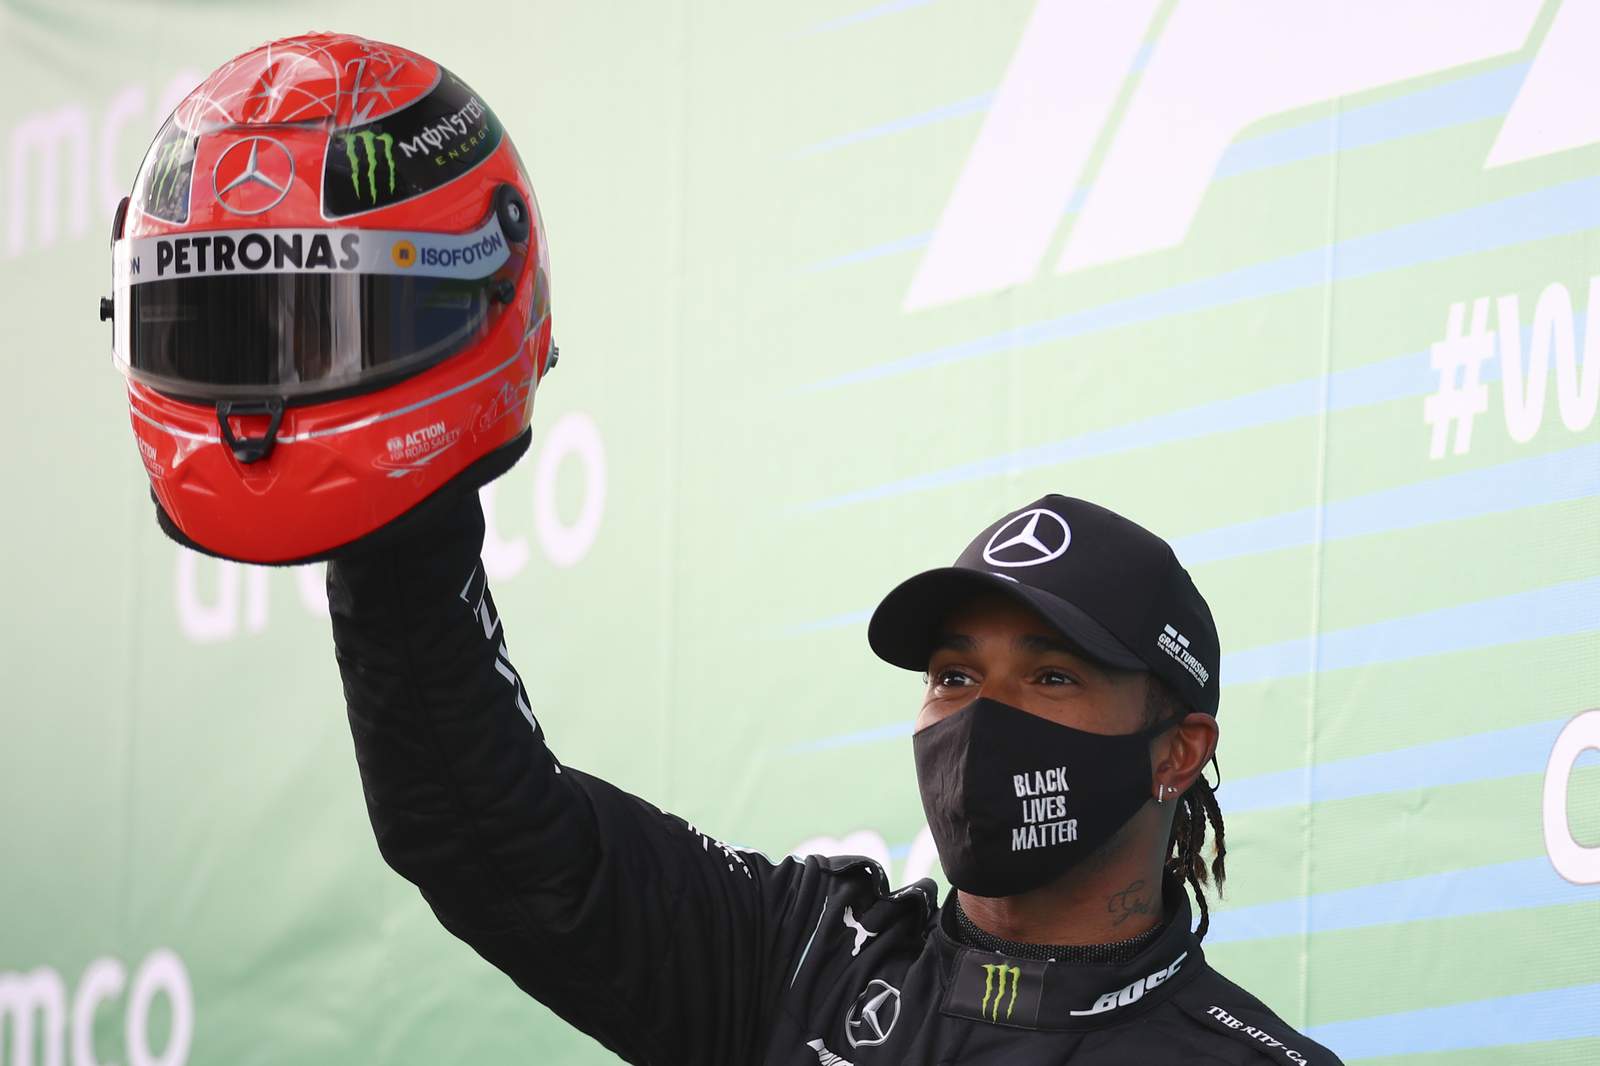 Hamilton wins his 91st F1 race to match Schumacher's record